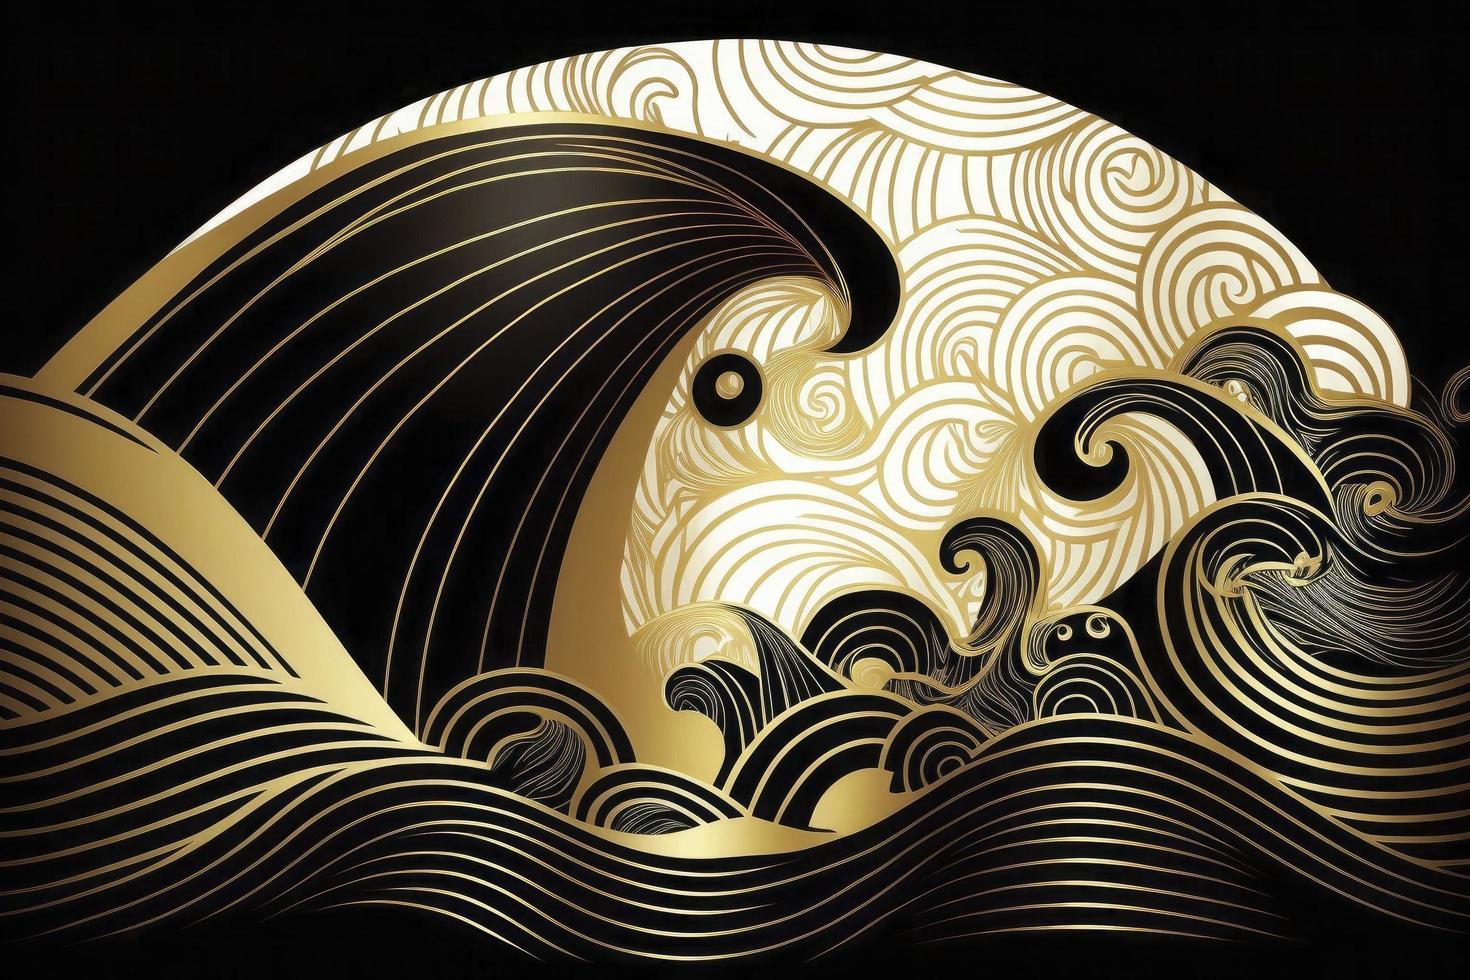 mooi Golf Leuk vinden lijnen zwart en goud Japans stijl achtergrond illustratie foto